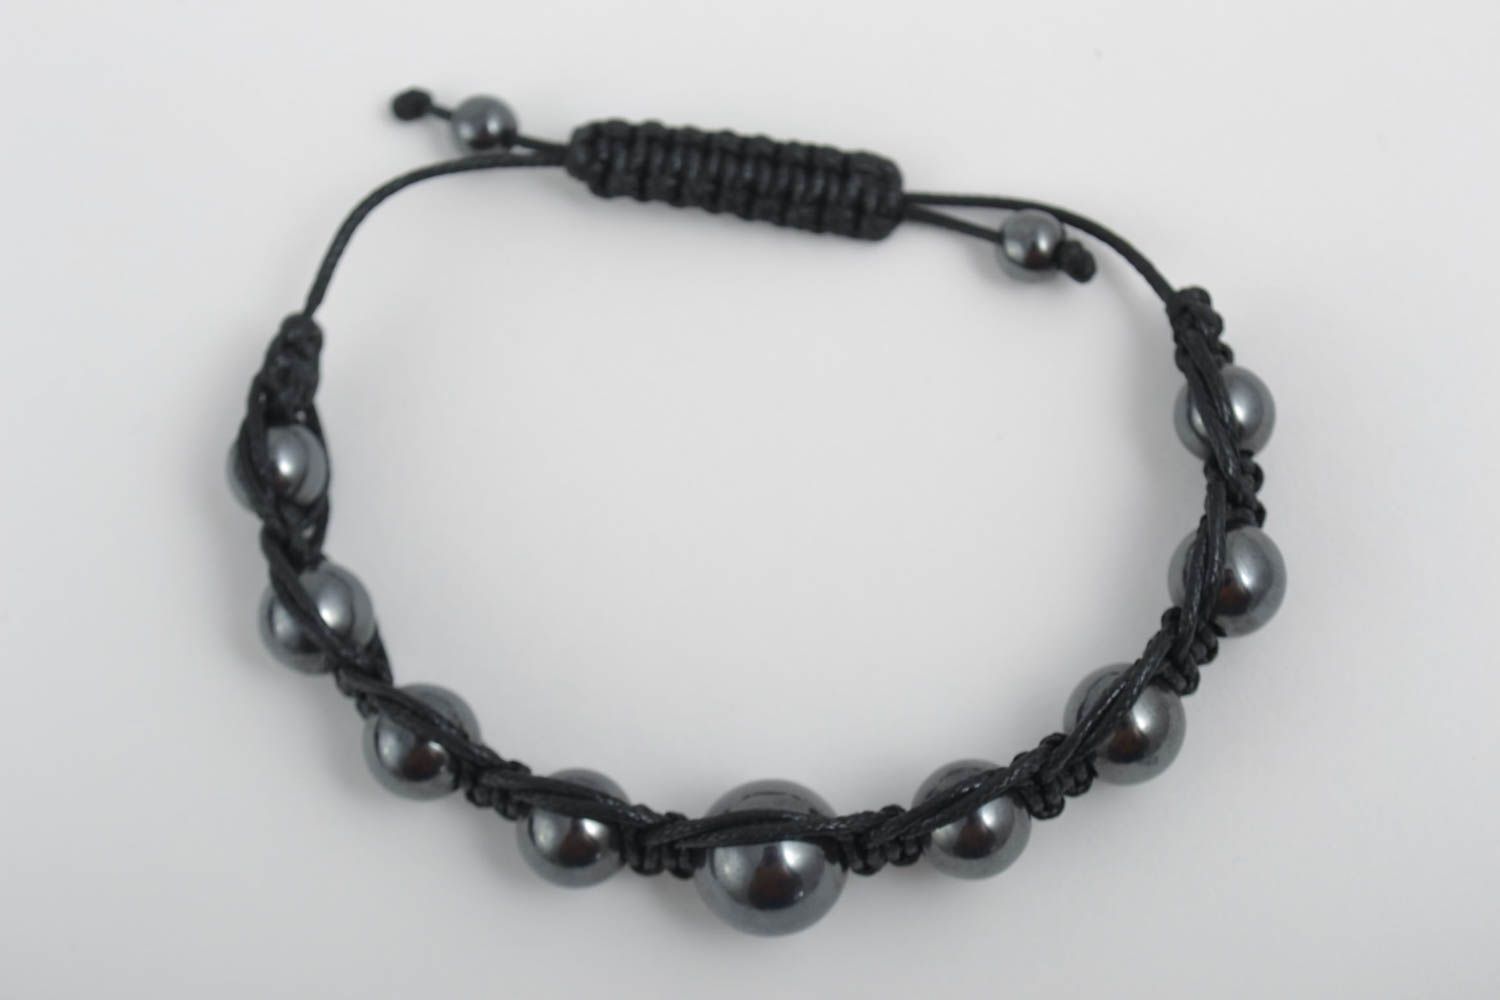 Handmade bracelet gemstone jewelry designer accessories gift ideas for her photo 2